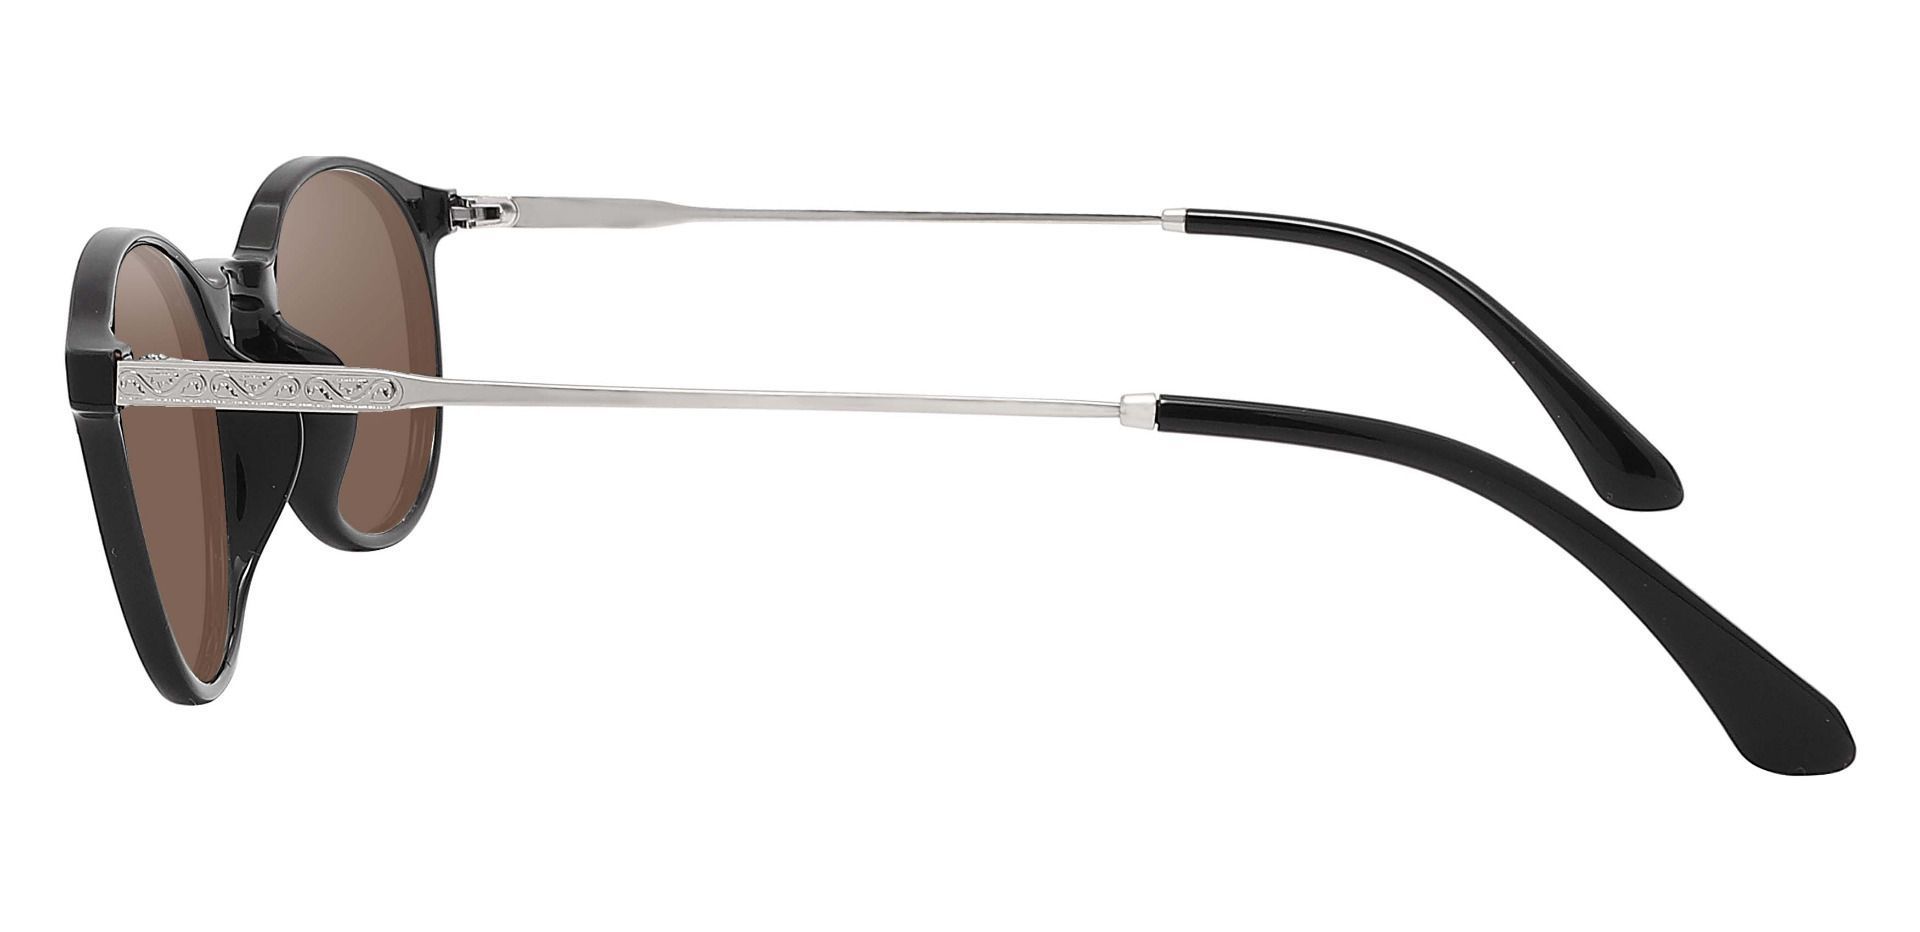 Felton Oval Prescription Sunglasses - Black Frame With Brown Lenses